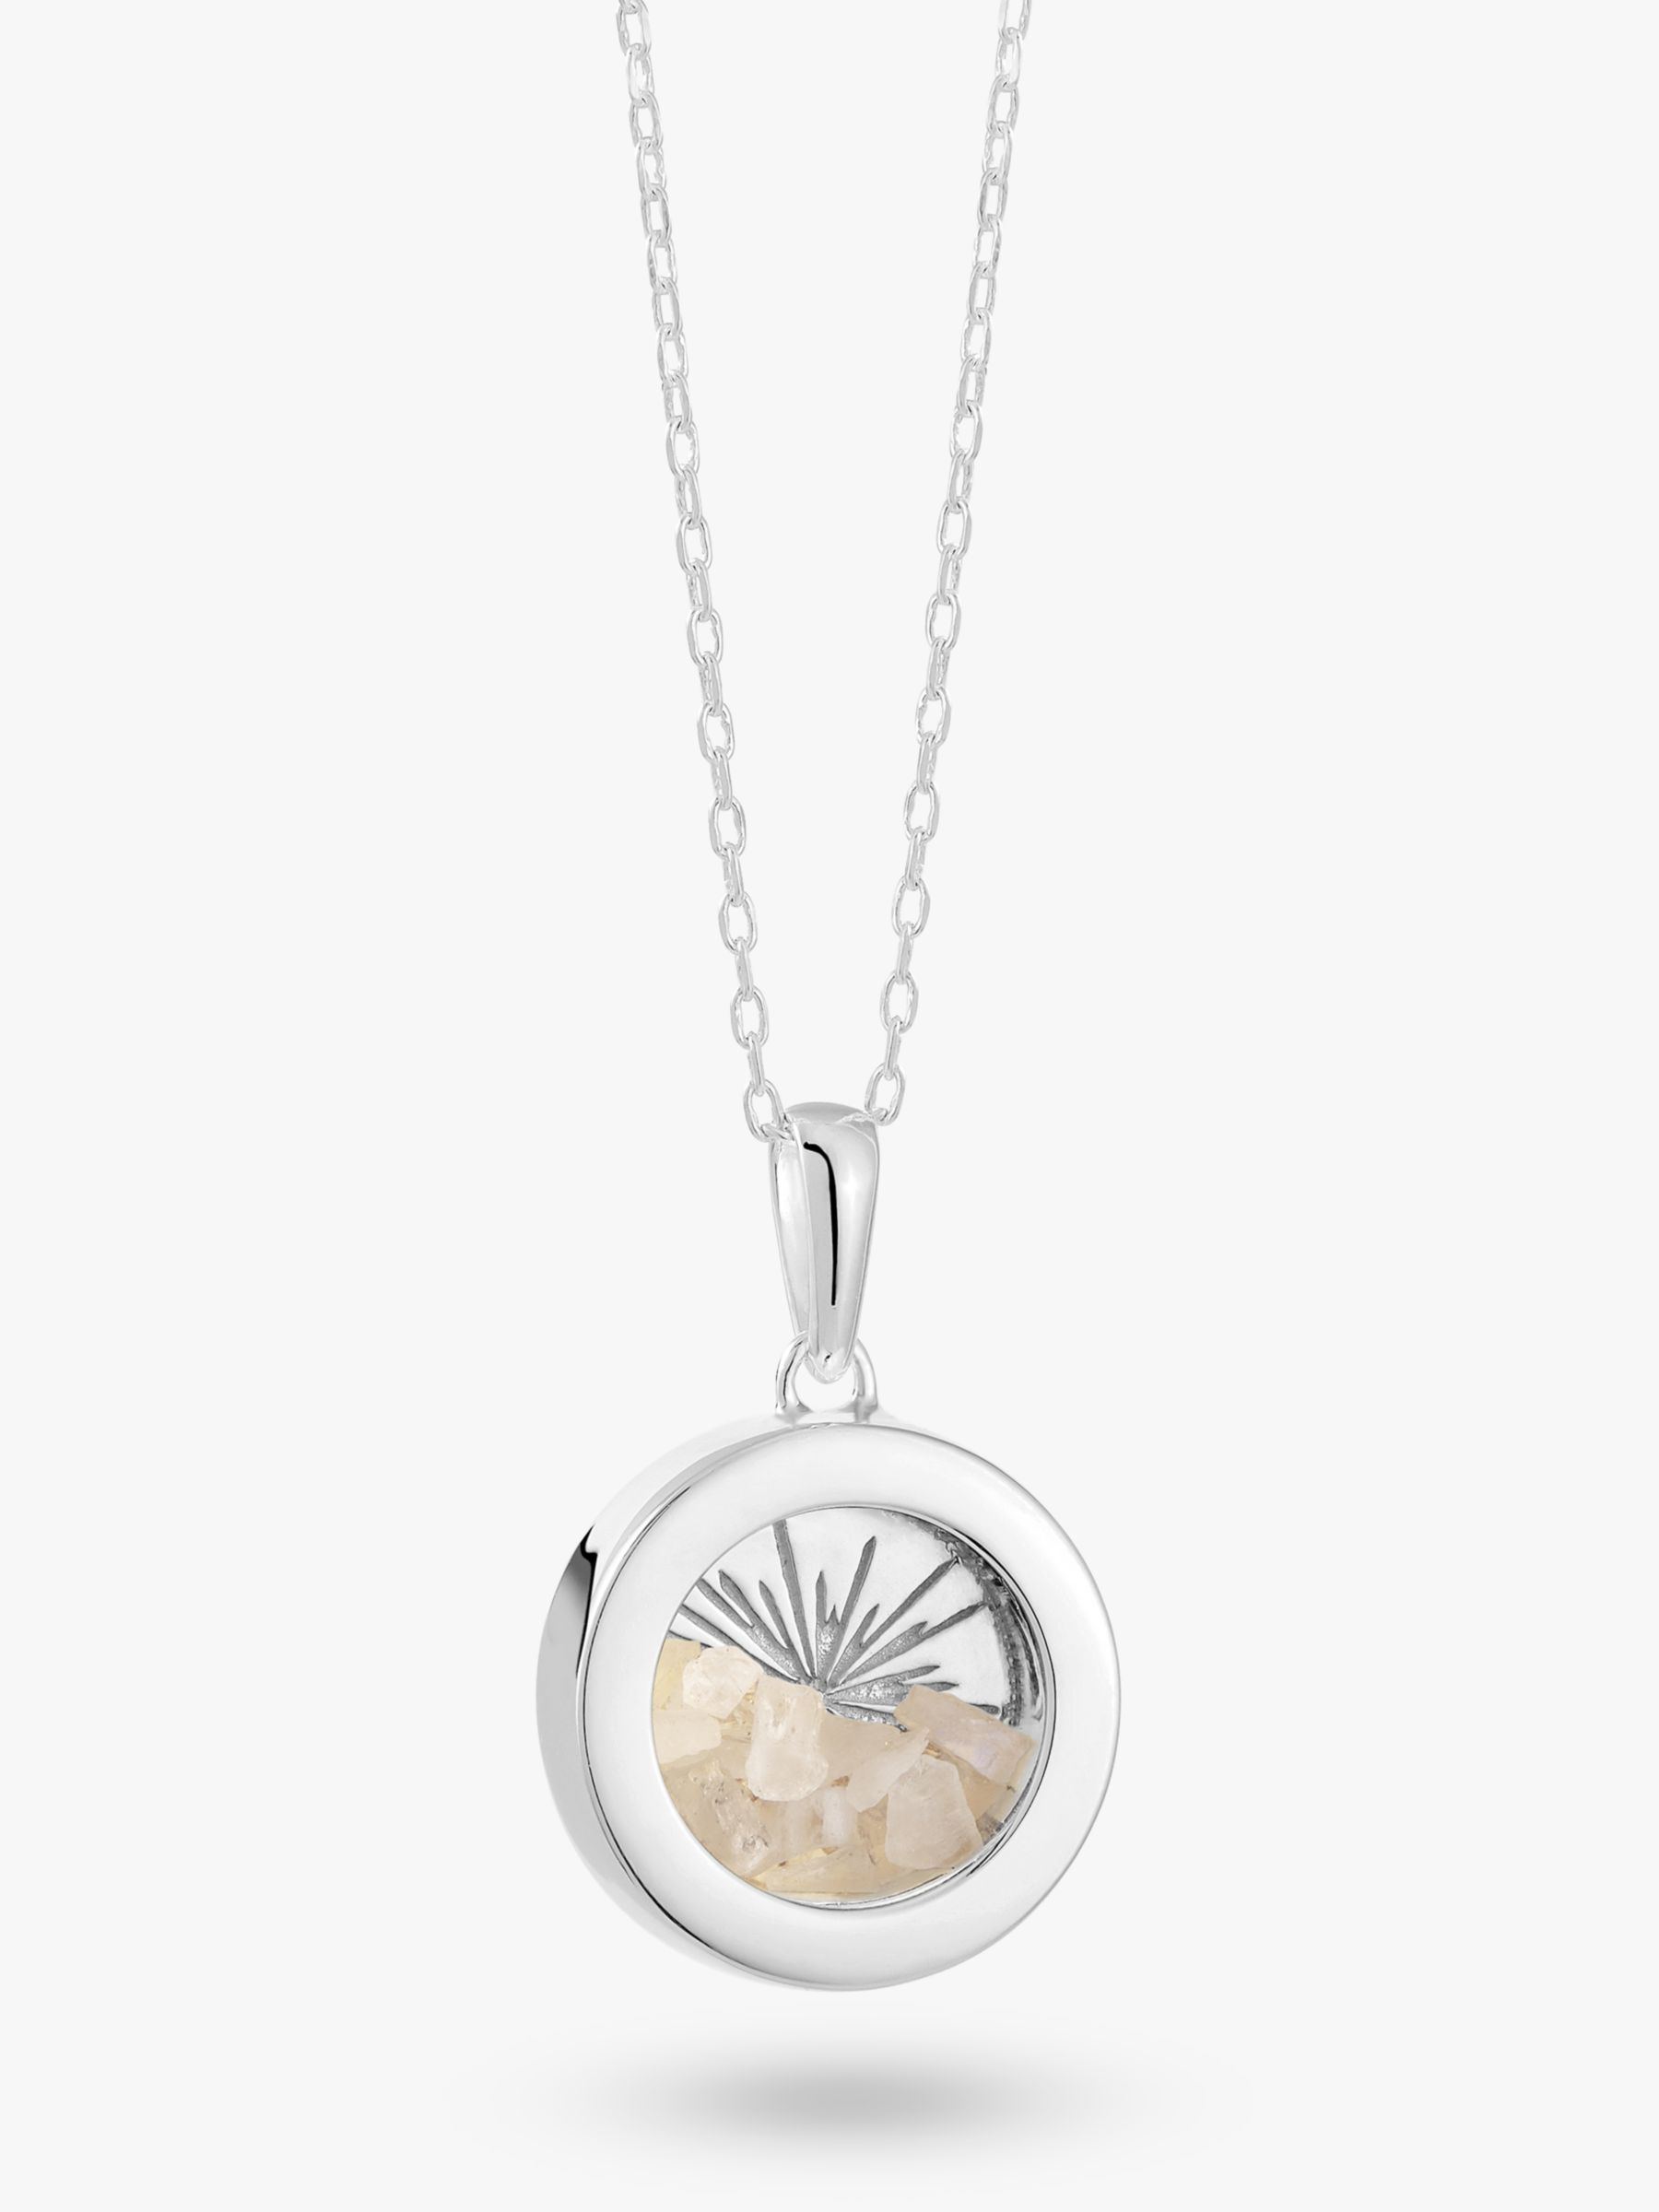 Rachel Jackson London Personalised Small Deco Sun Birthstone Amulet Necklace, Silver, Moonstone - June